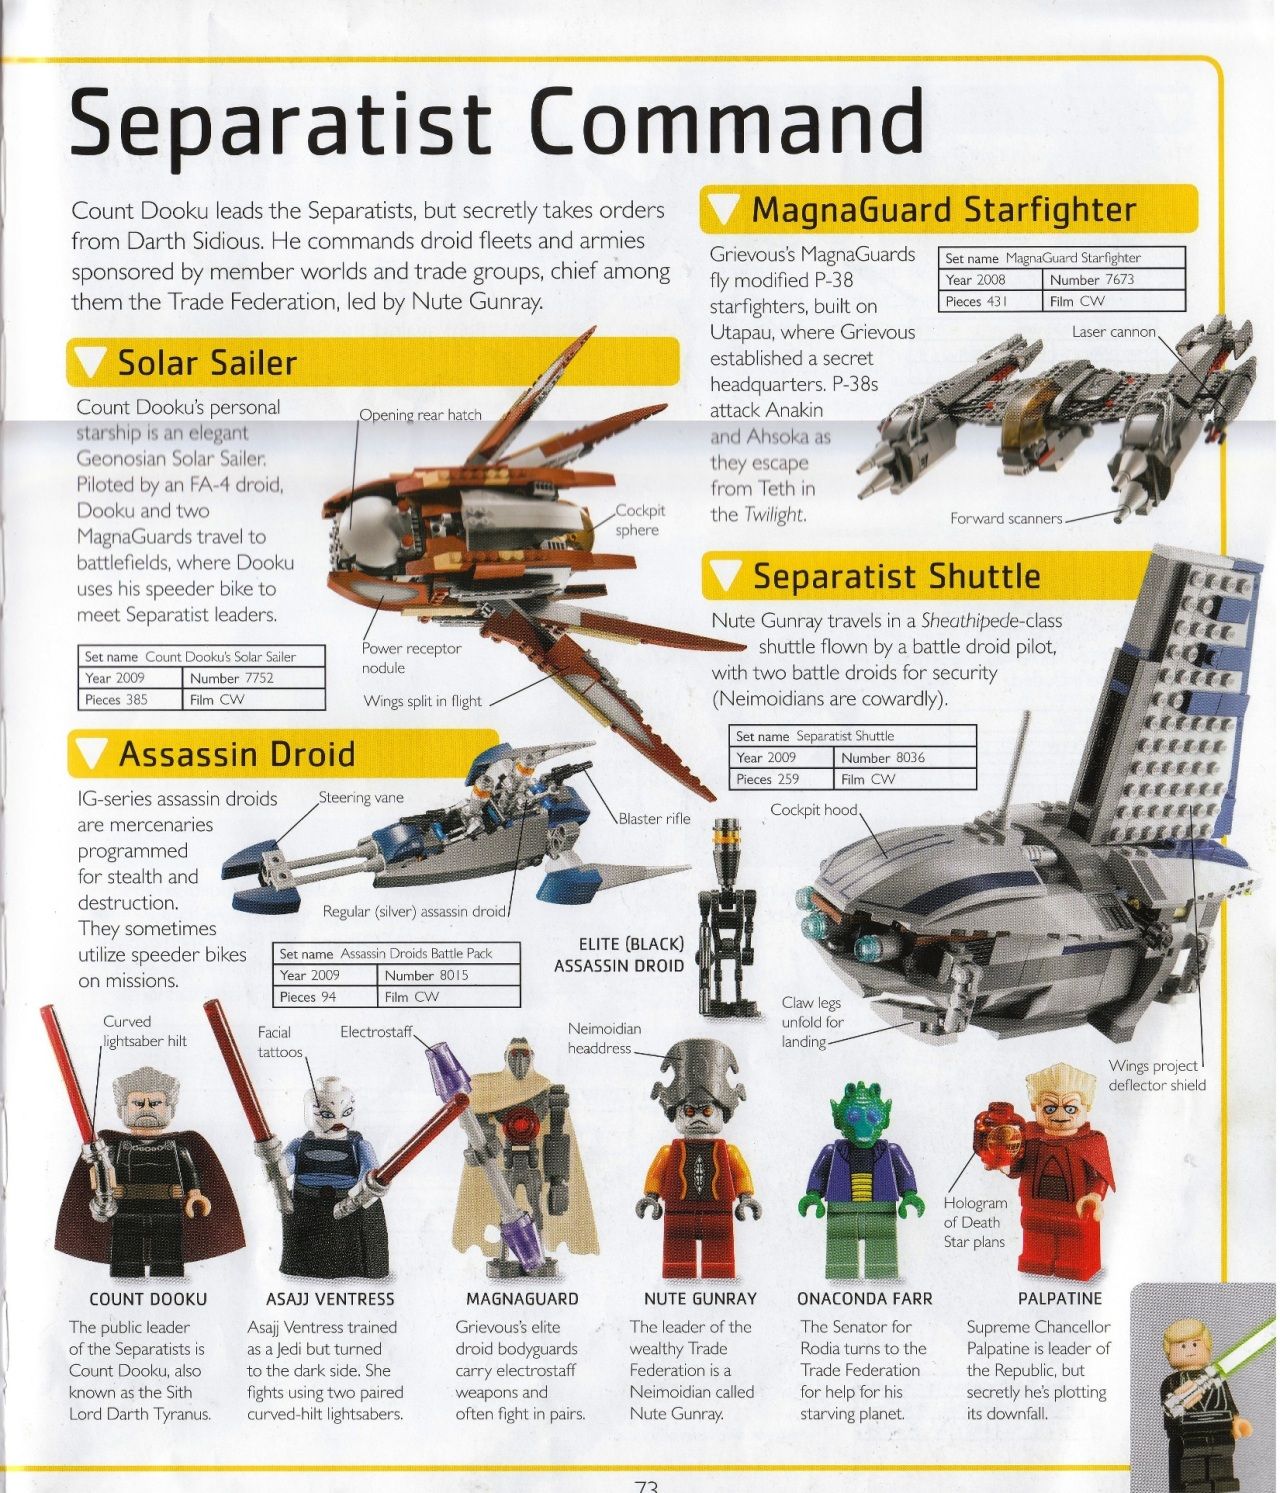 Lego Star Wars The Visual Dictionary 2009 Lego Star Wars The Visual Dictionary 2009 74